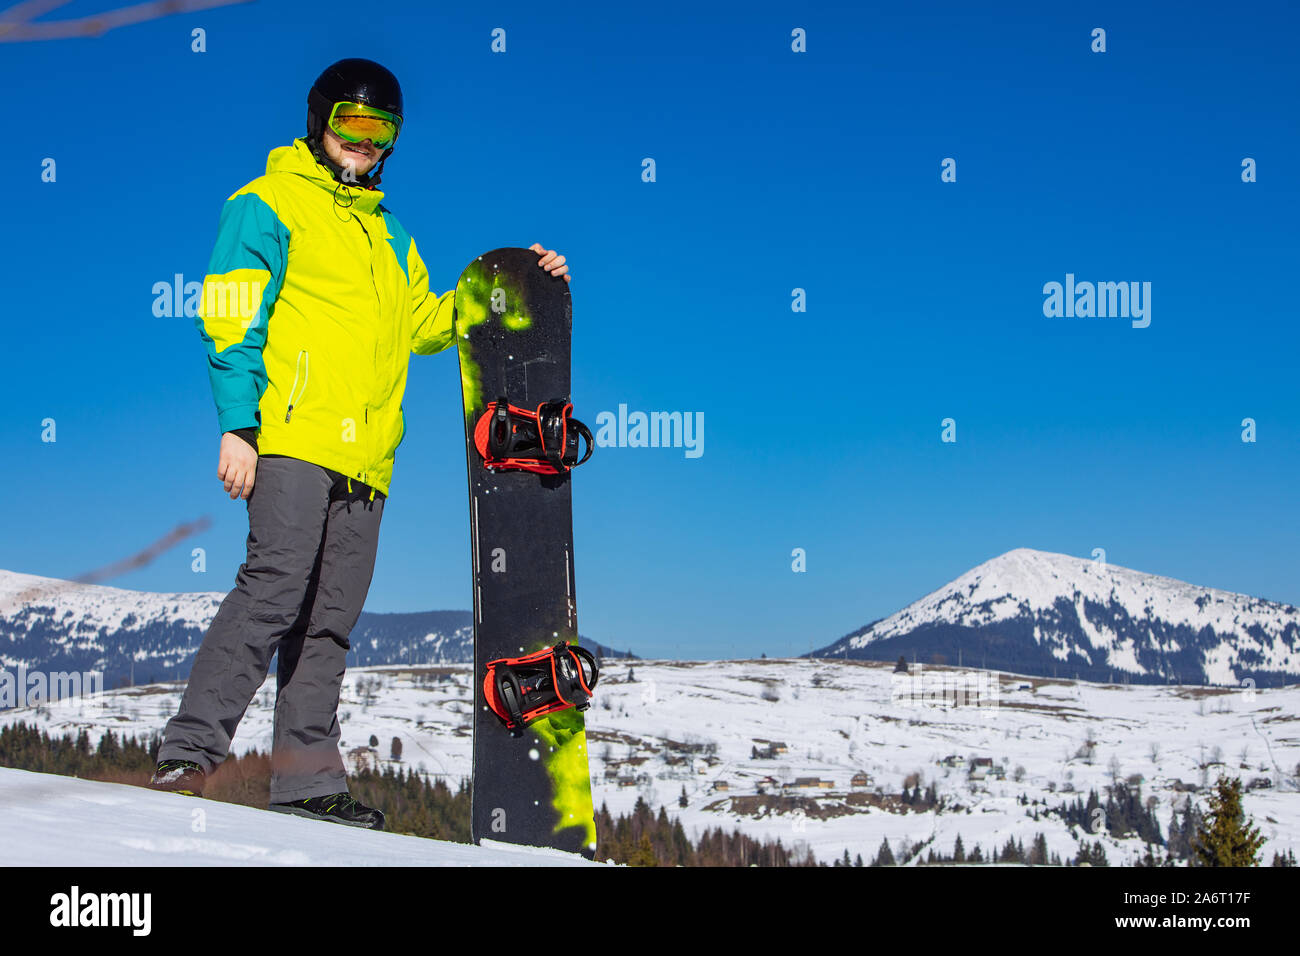 Mann in Sonnenbrille snowboard Holding Stockfotografie - Alamy